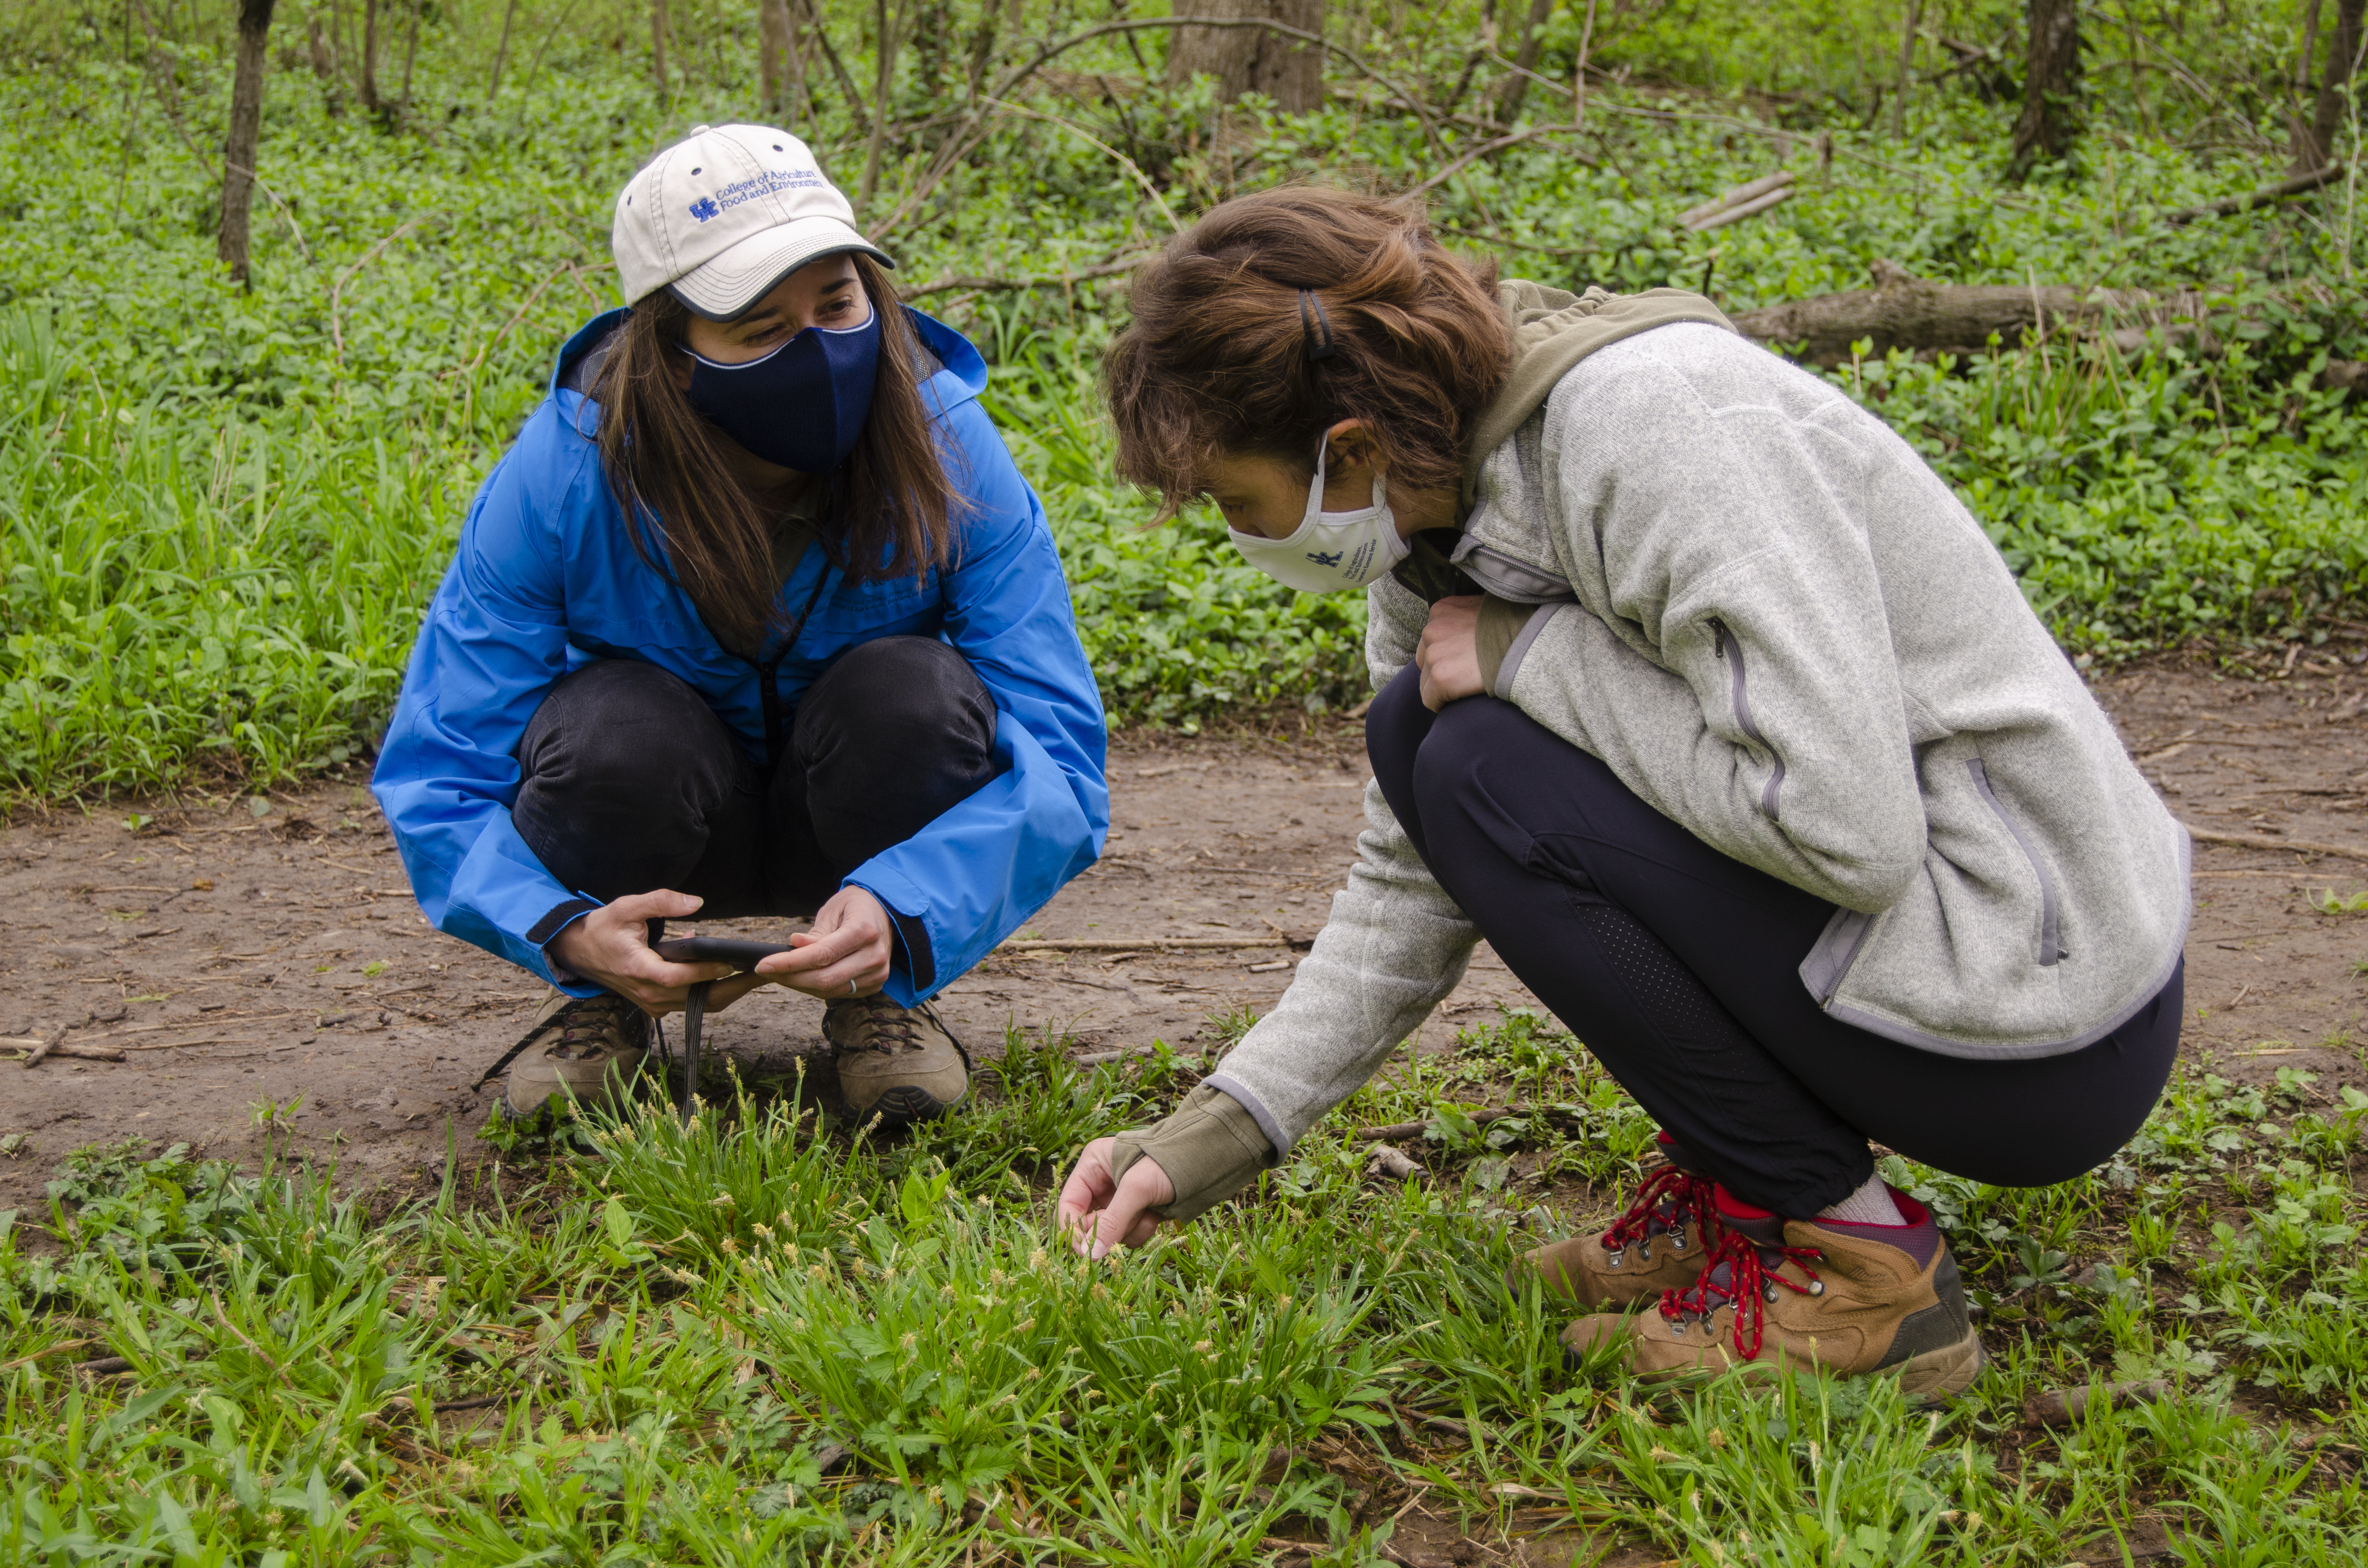 Ellen Crocker (left) and Emily Ellingson examine native sedges growing in The Arboretum Woods. Photo by Carol Lea Spence